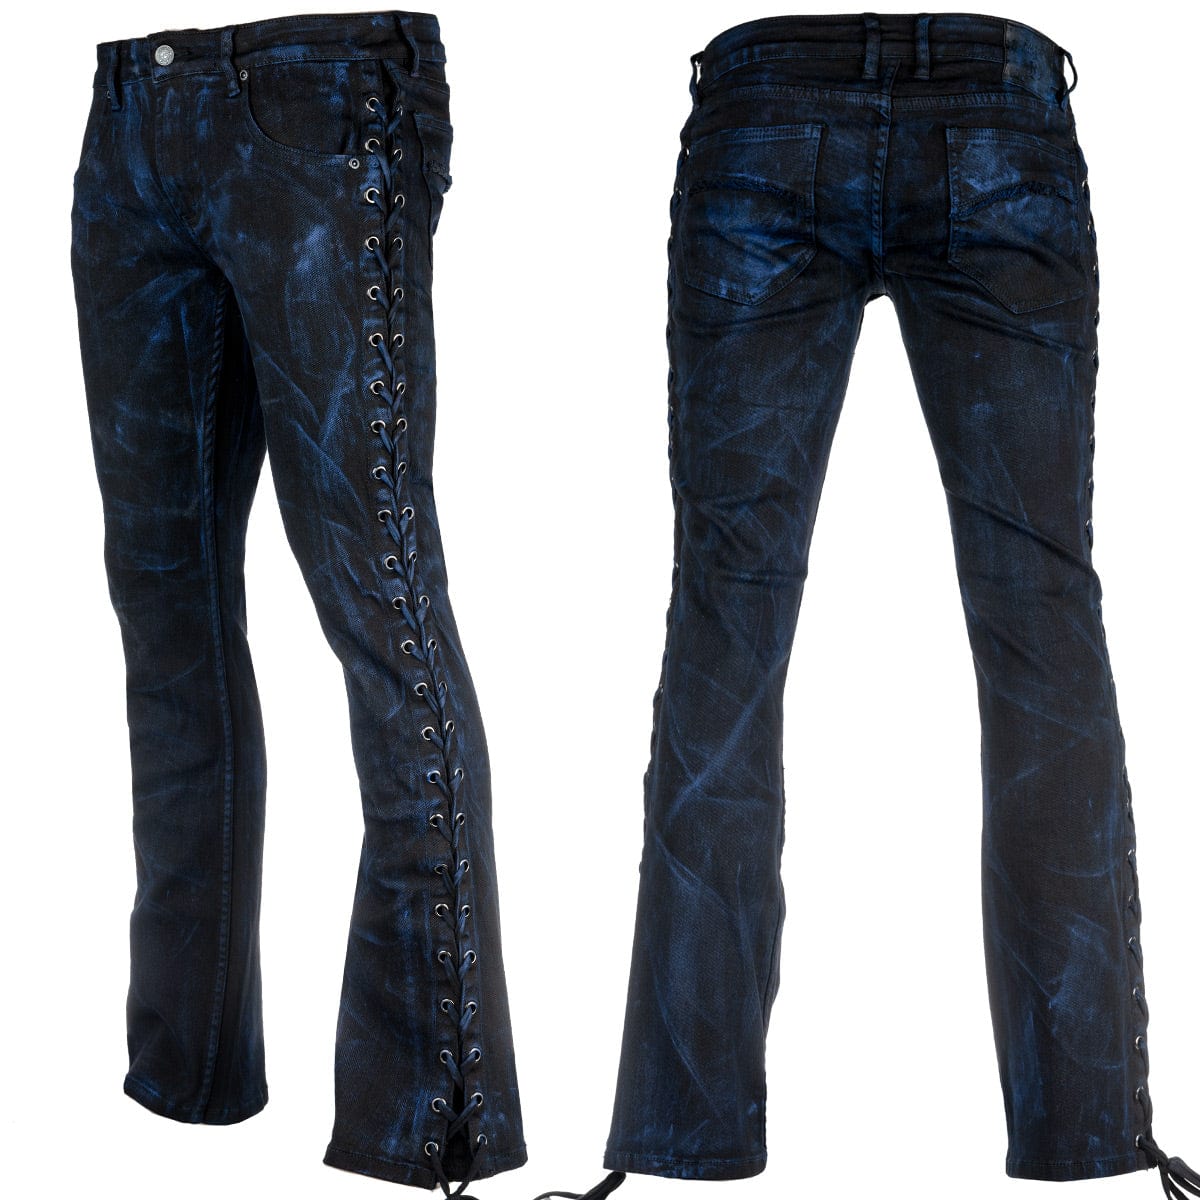 Custom Chop Shop Pants Wornstar Custom Jeans - Cobalt Blue Alloy Washed Side Laced